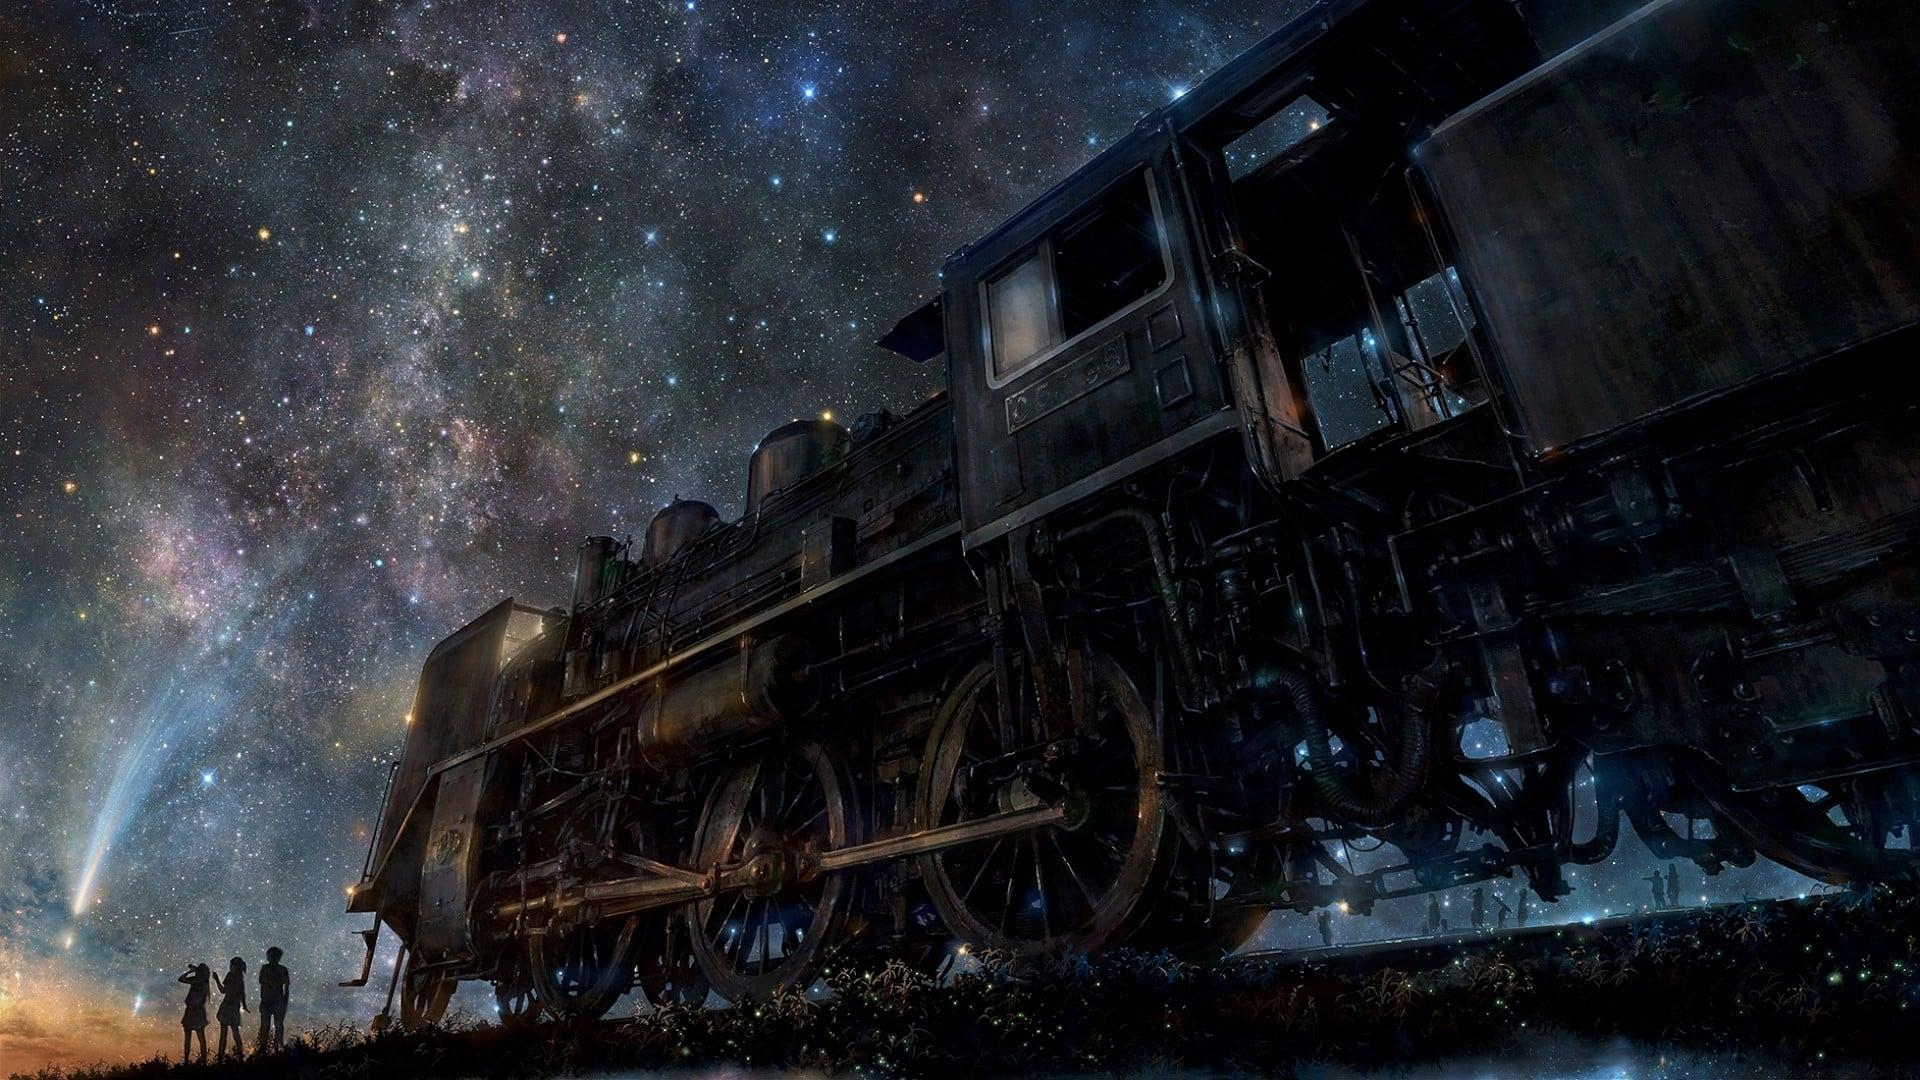 The Celestial Railroad backdrop